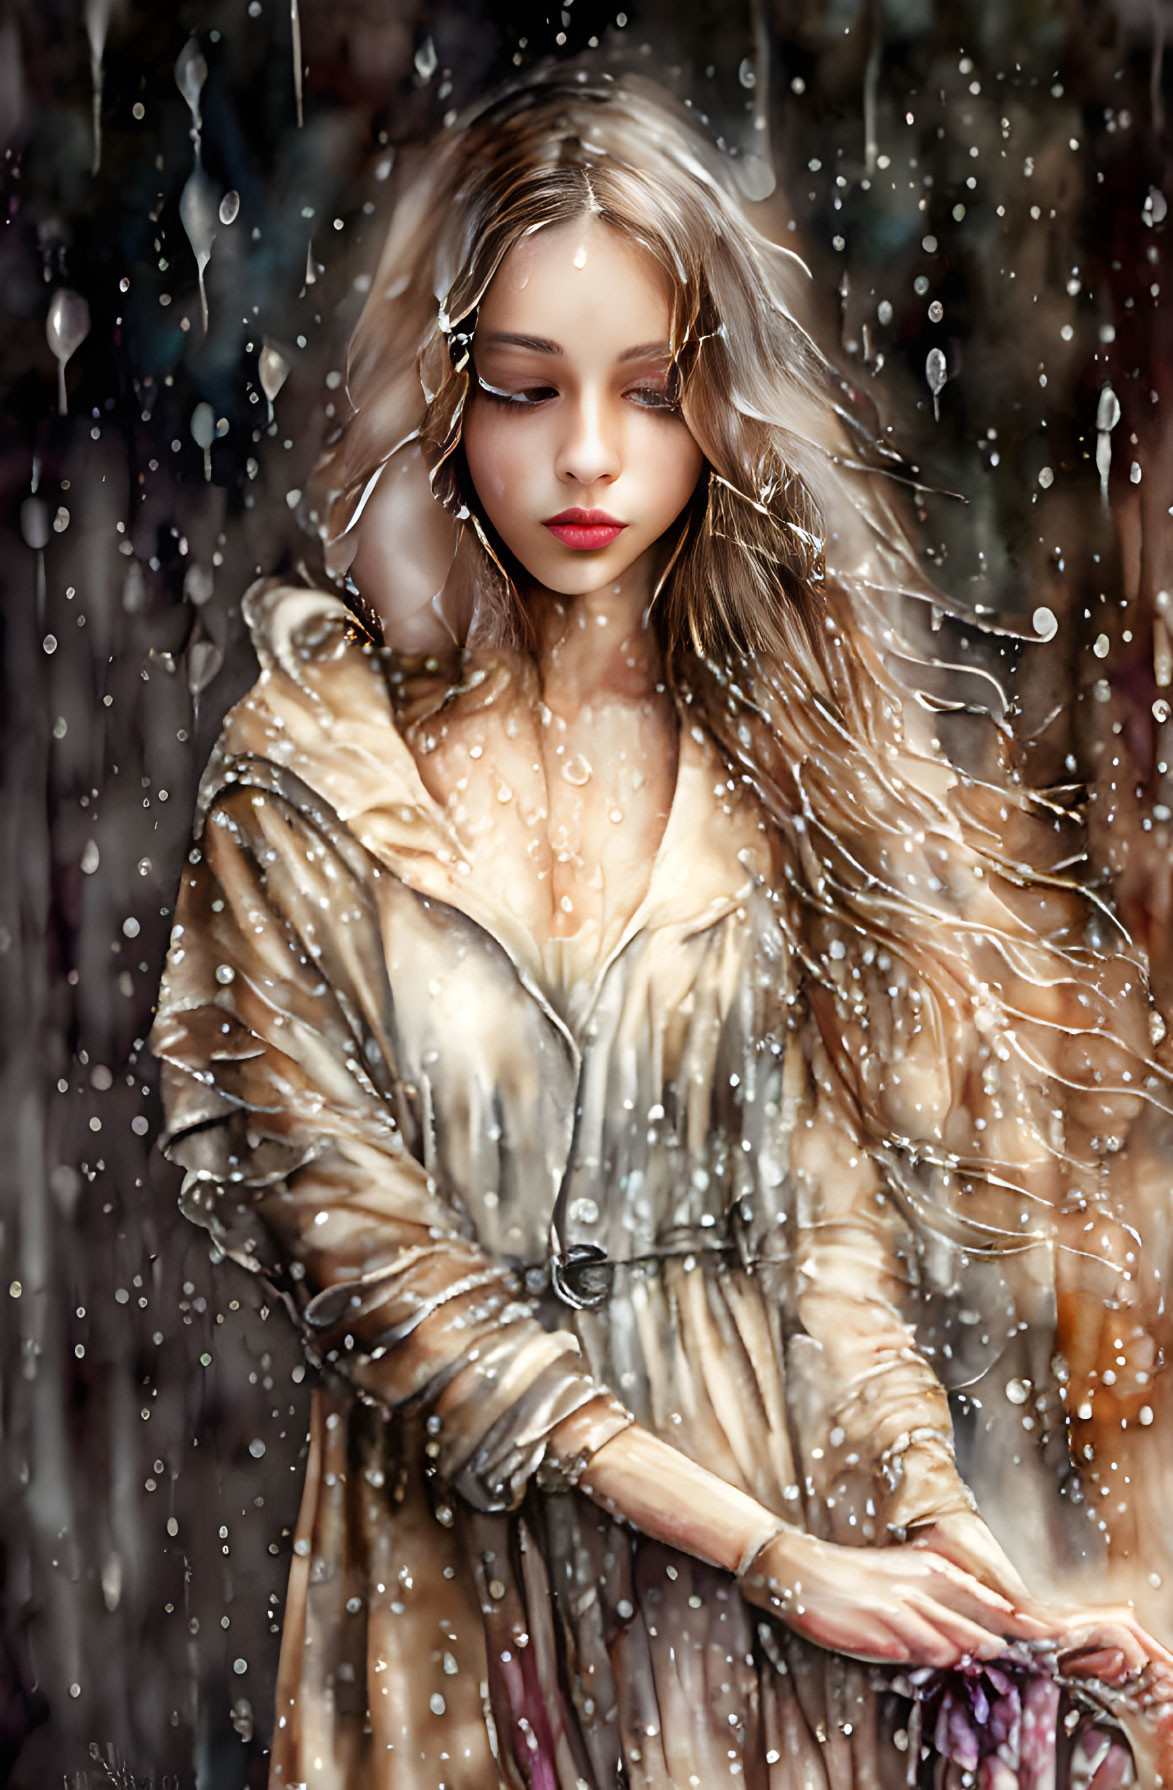 Serene young woman in light coat standing in rain